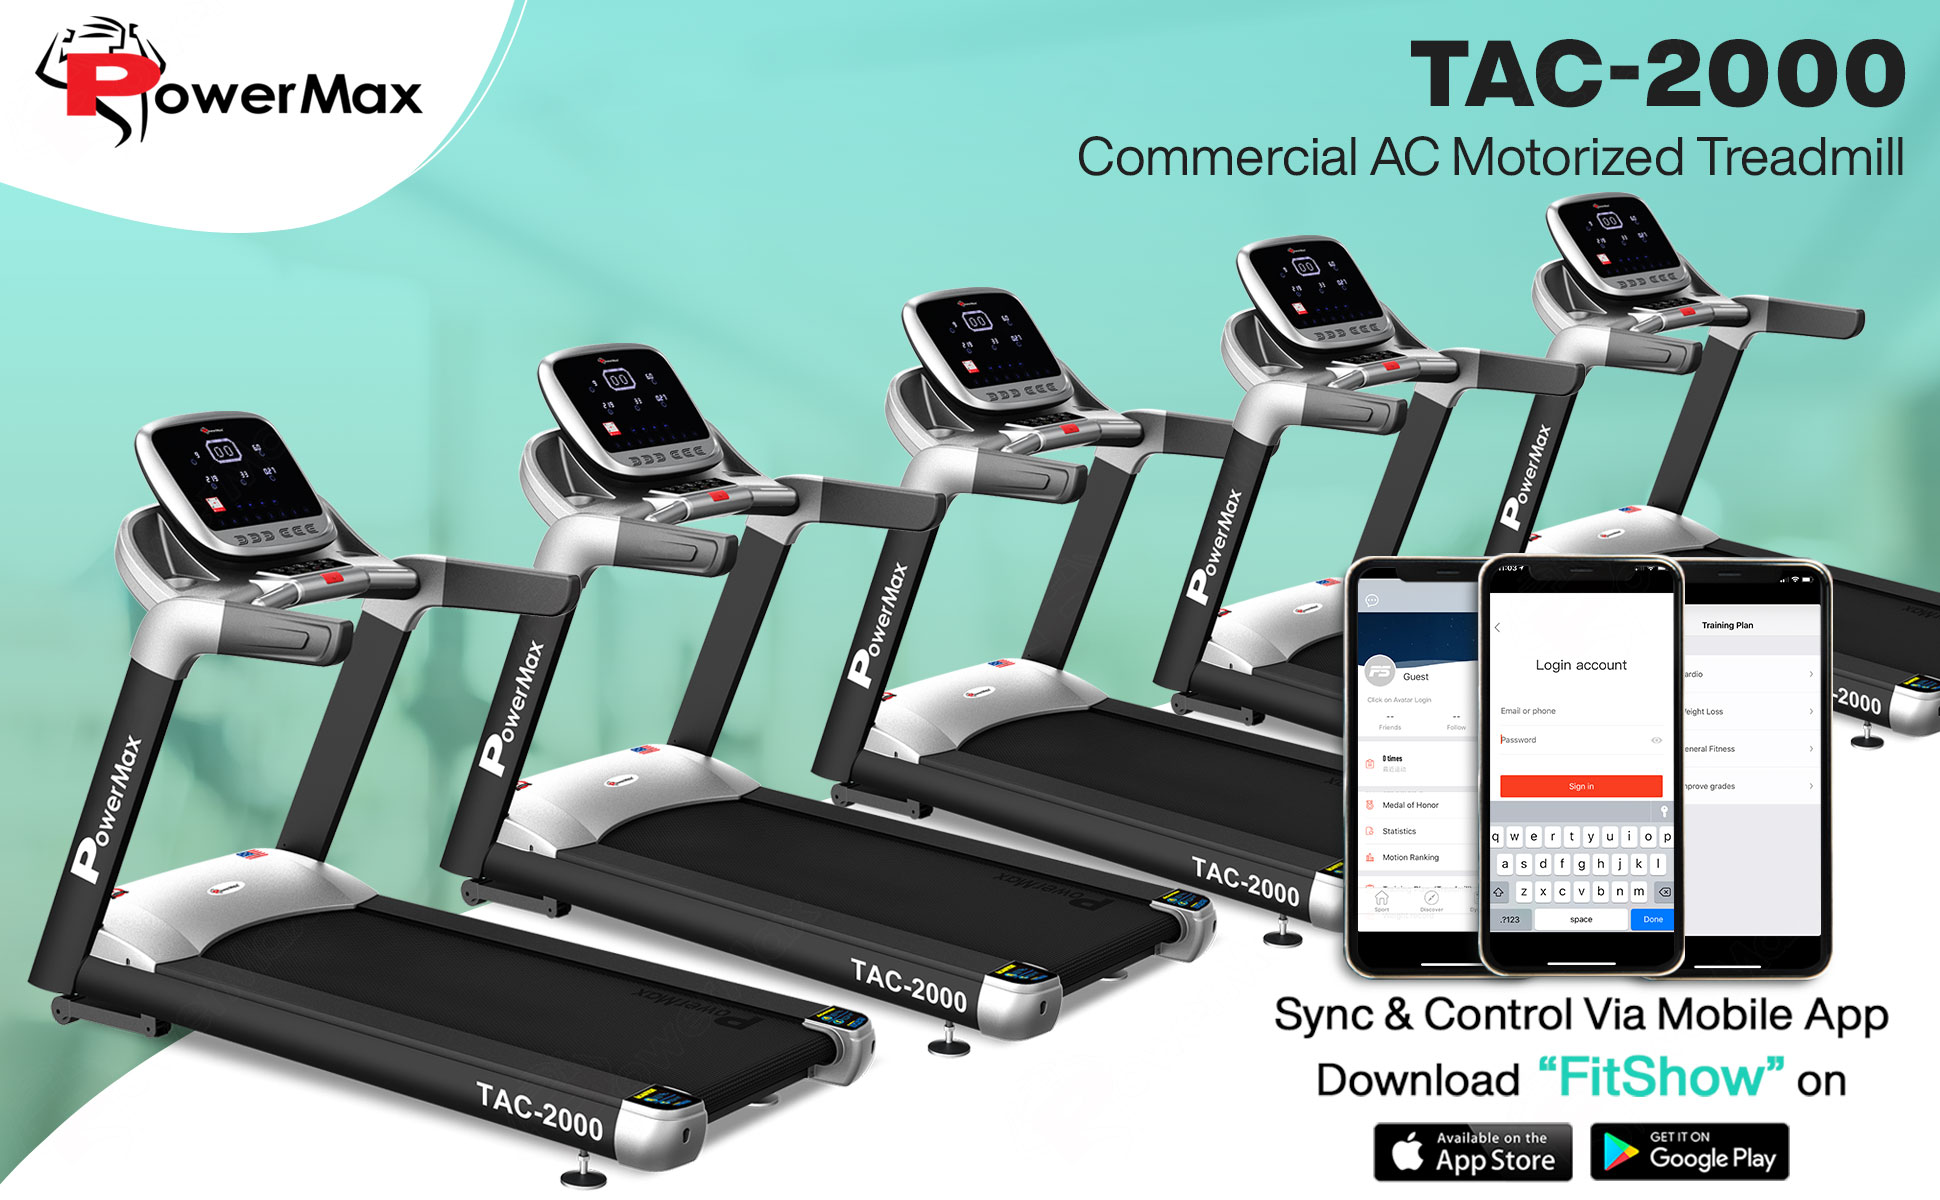 PowerMax TAC-2000 Commercial AC Motorized Treadmill